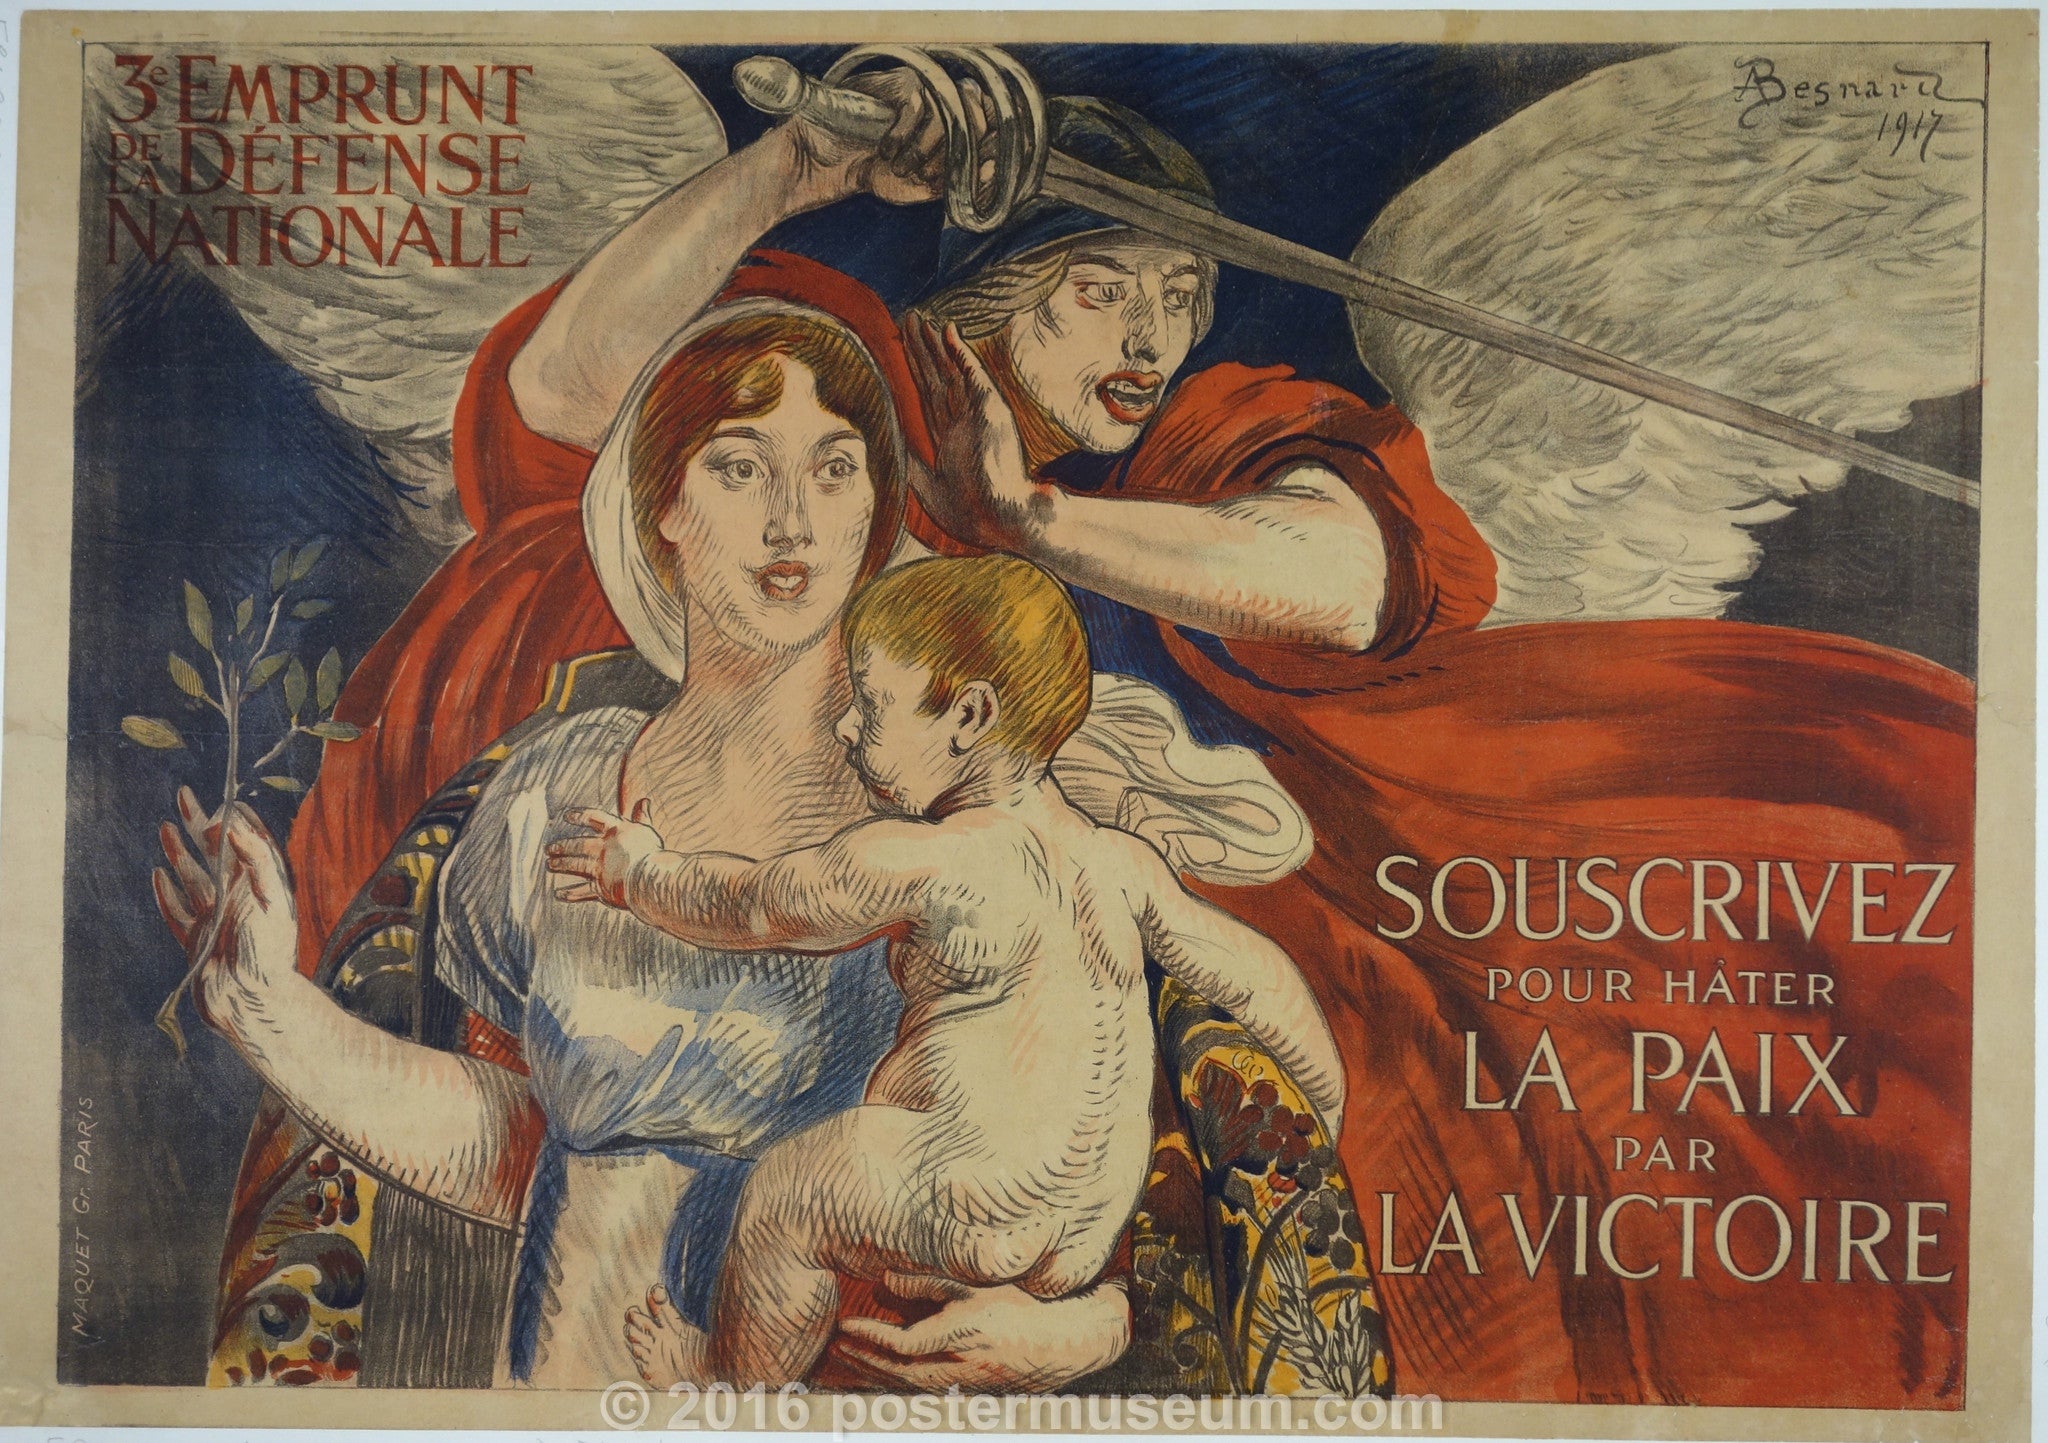 vintage french war poster